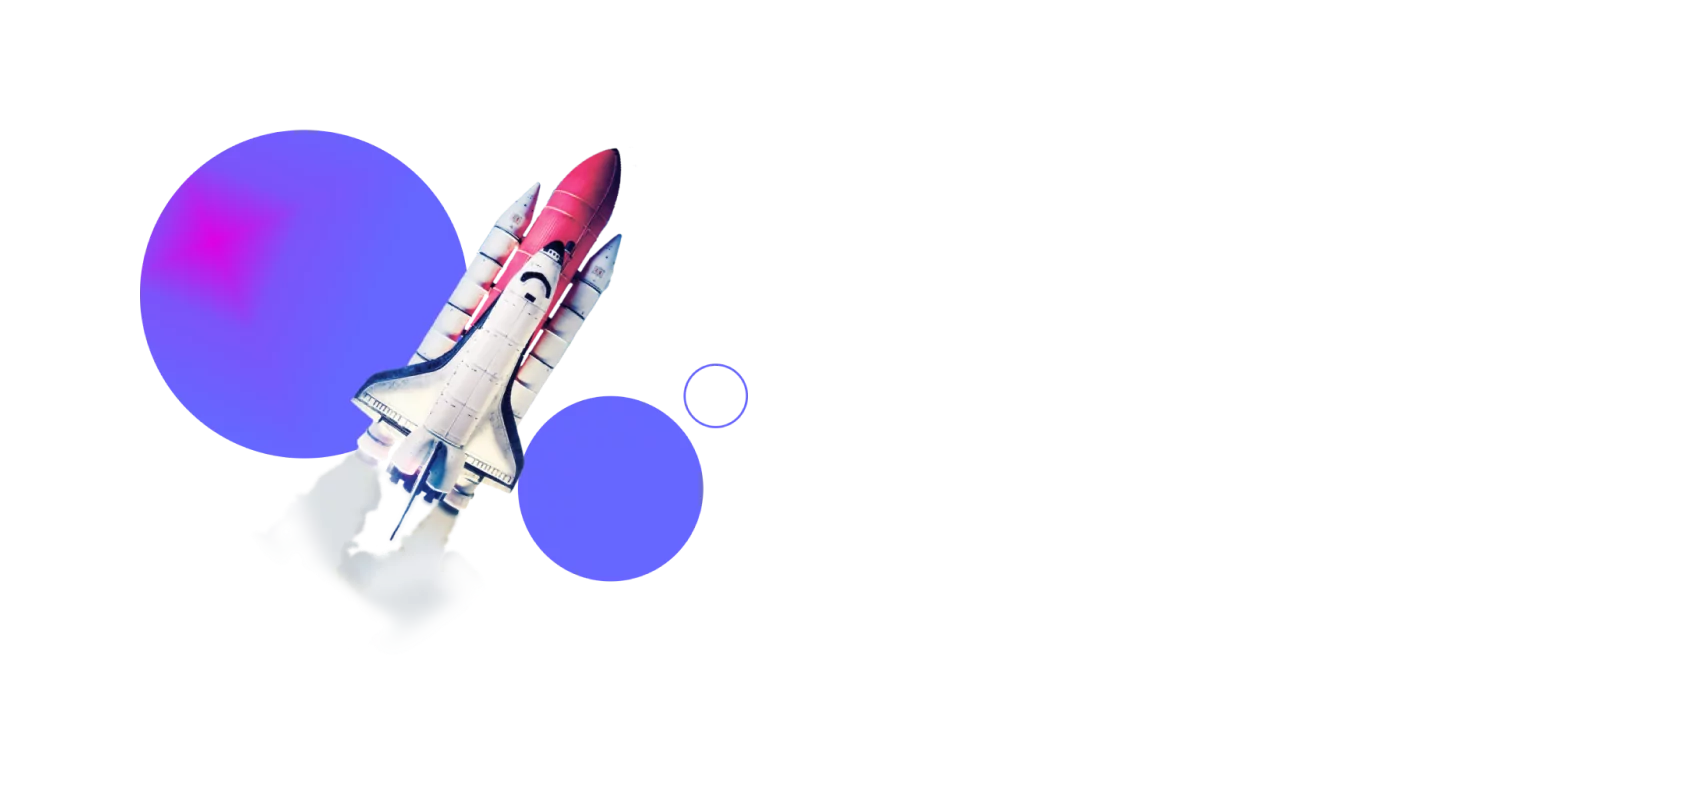 rocket taking off